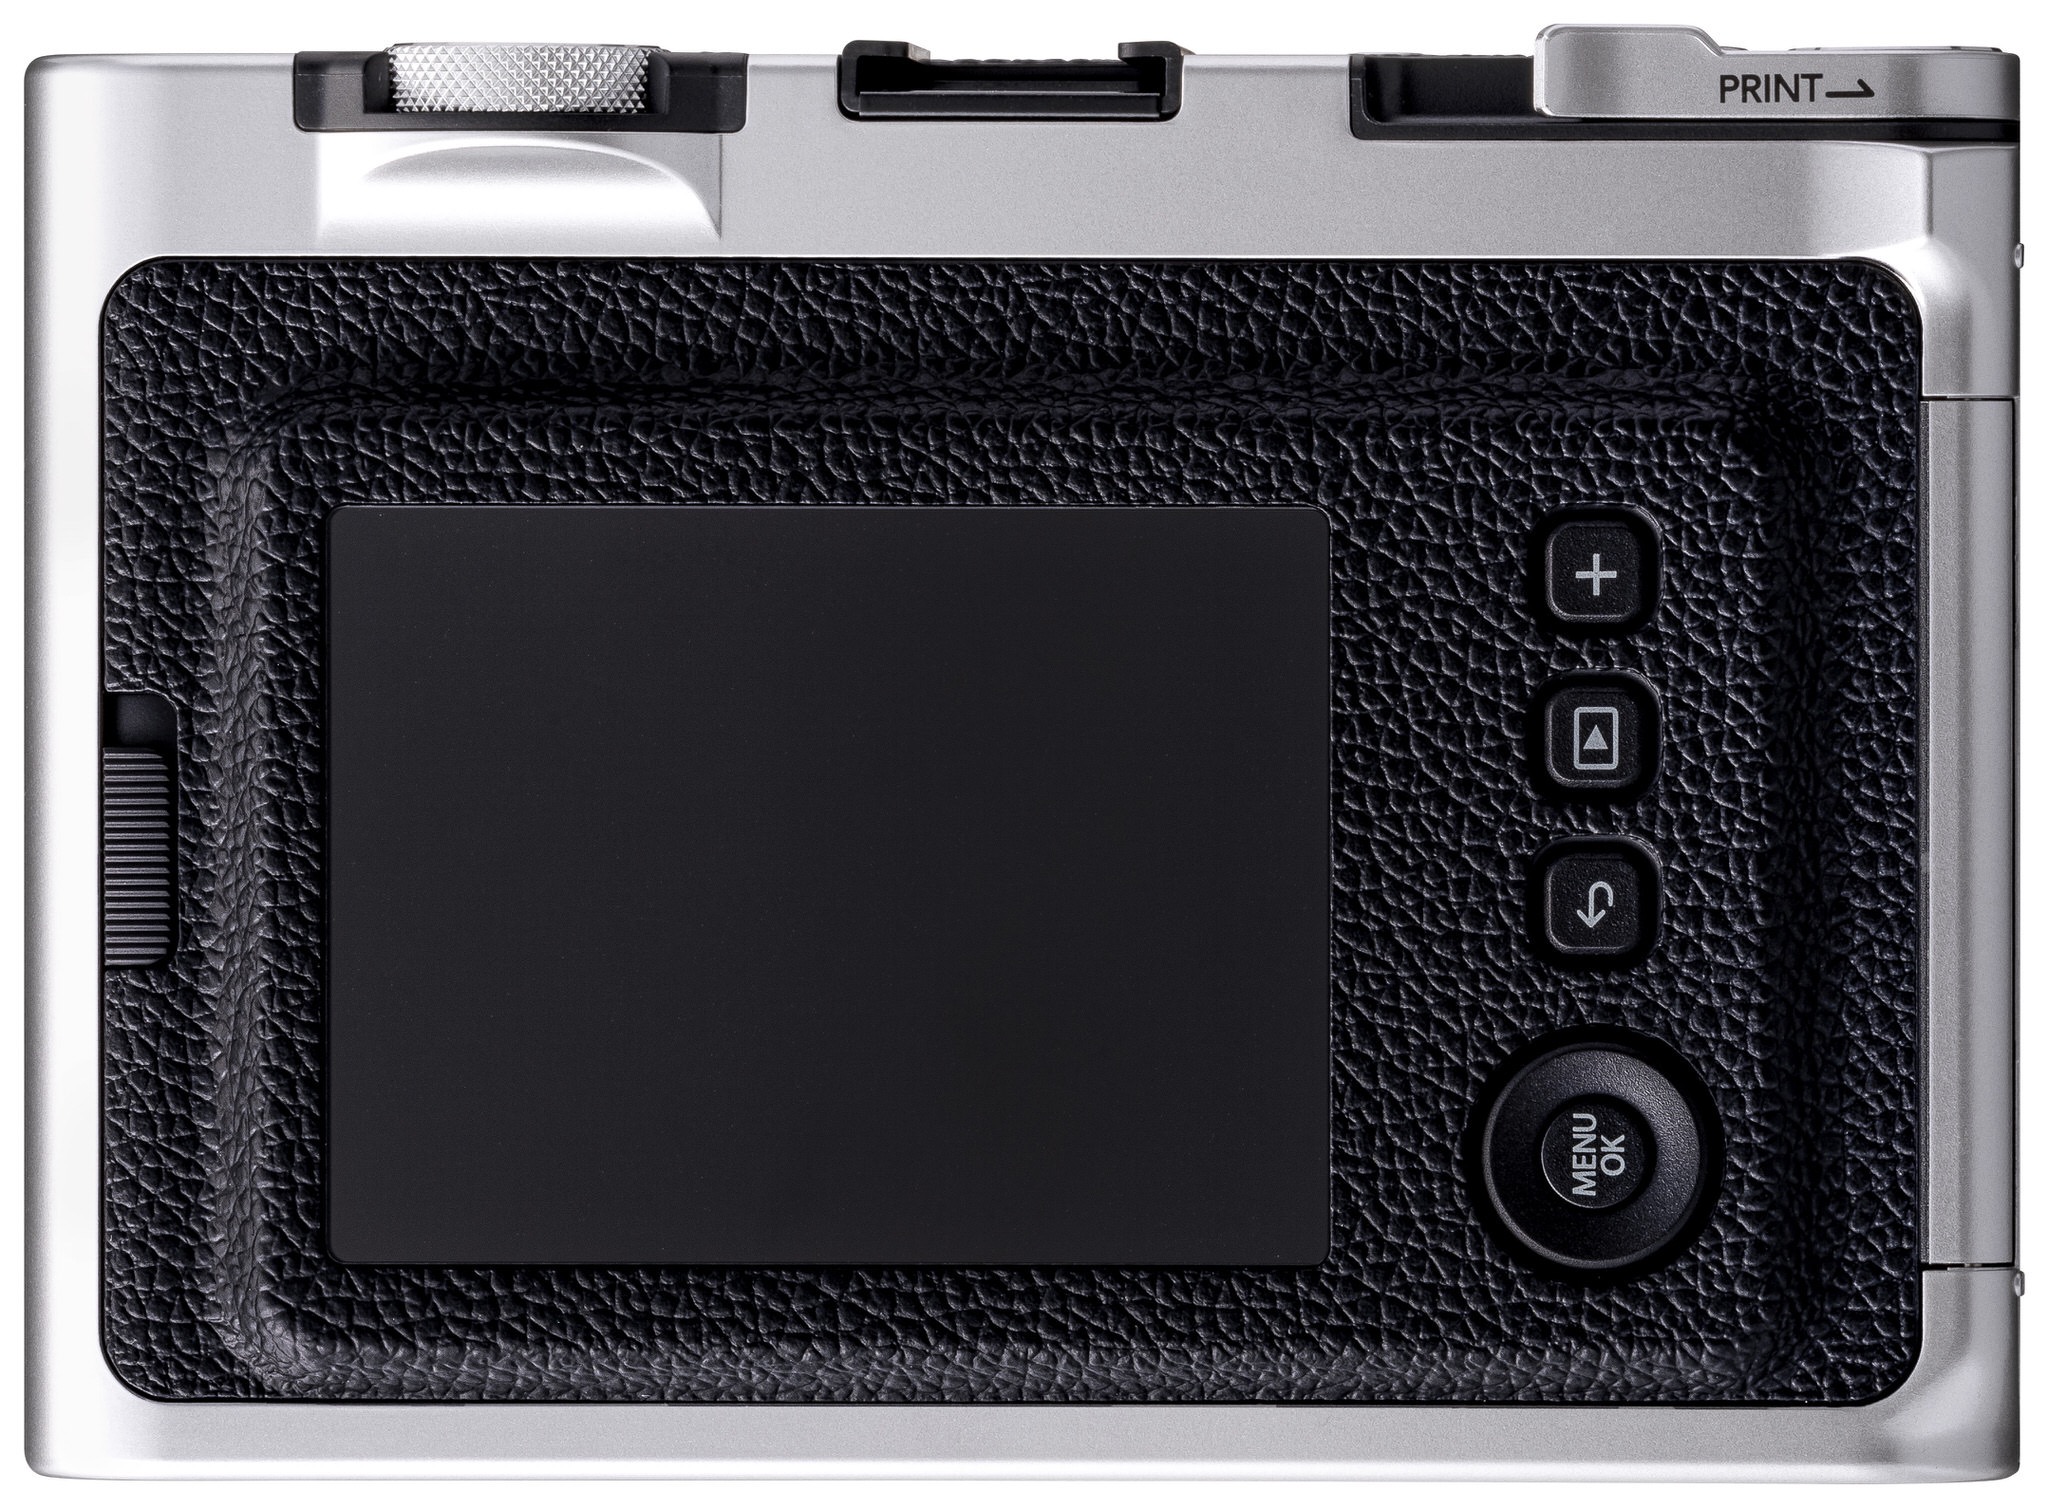 Fujifilm Instax Mini Evo hybrid instant camera announced - Photo Rumors